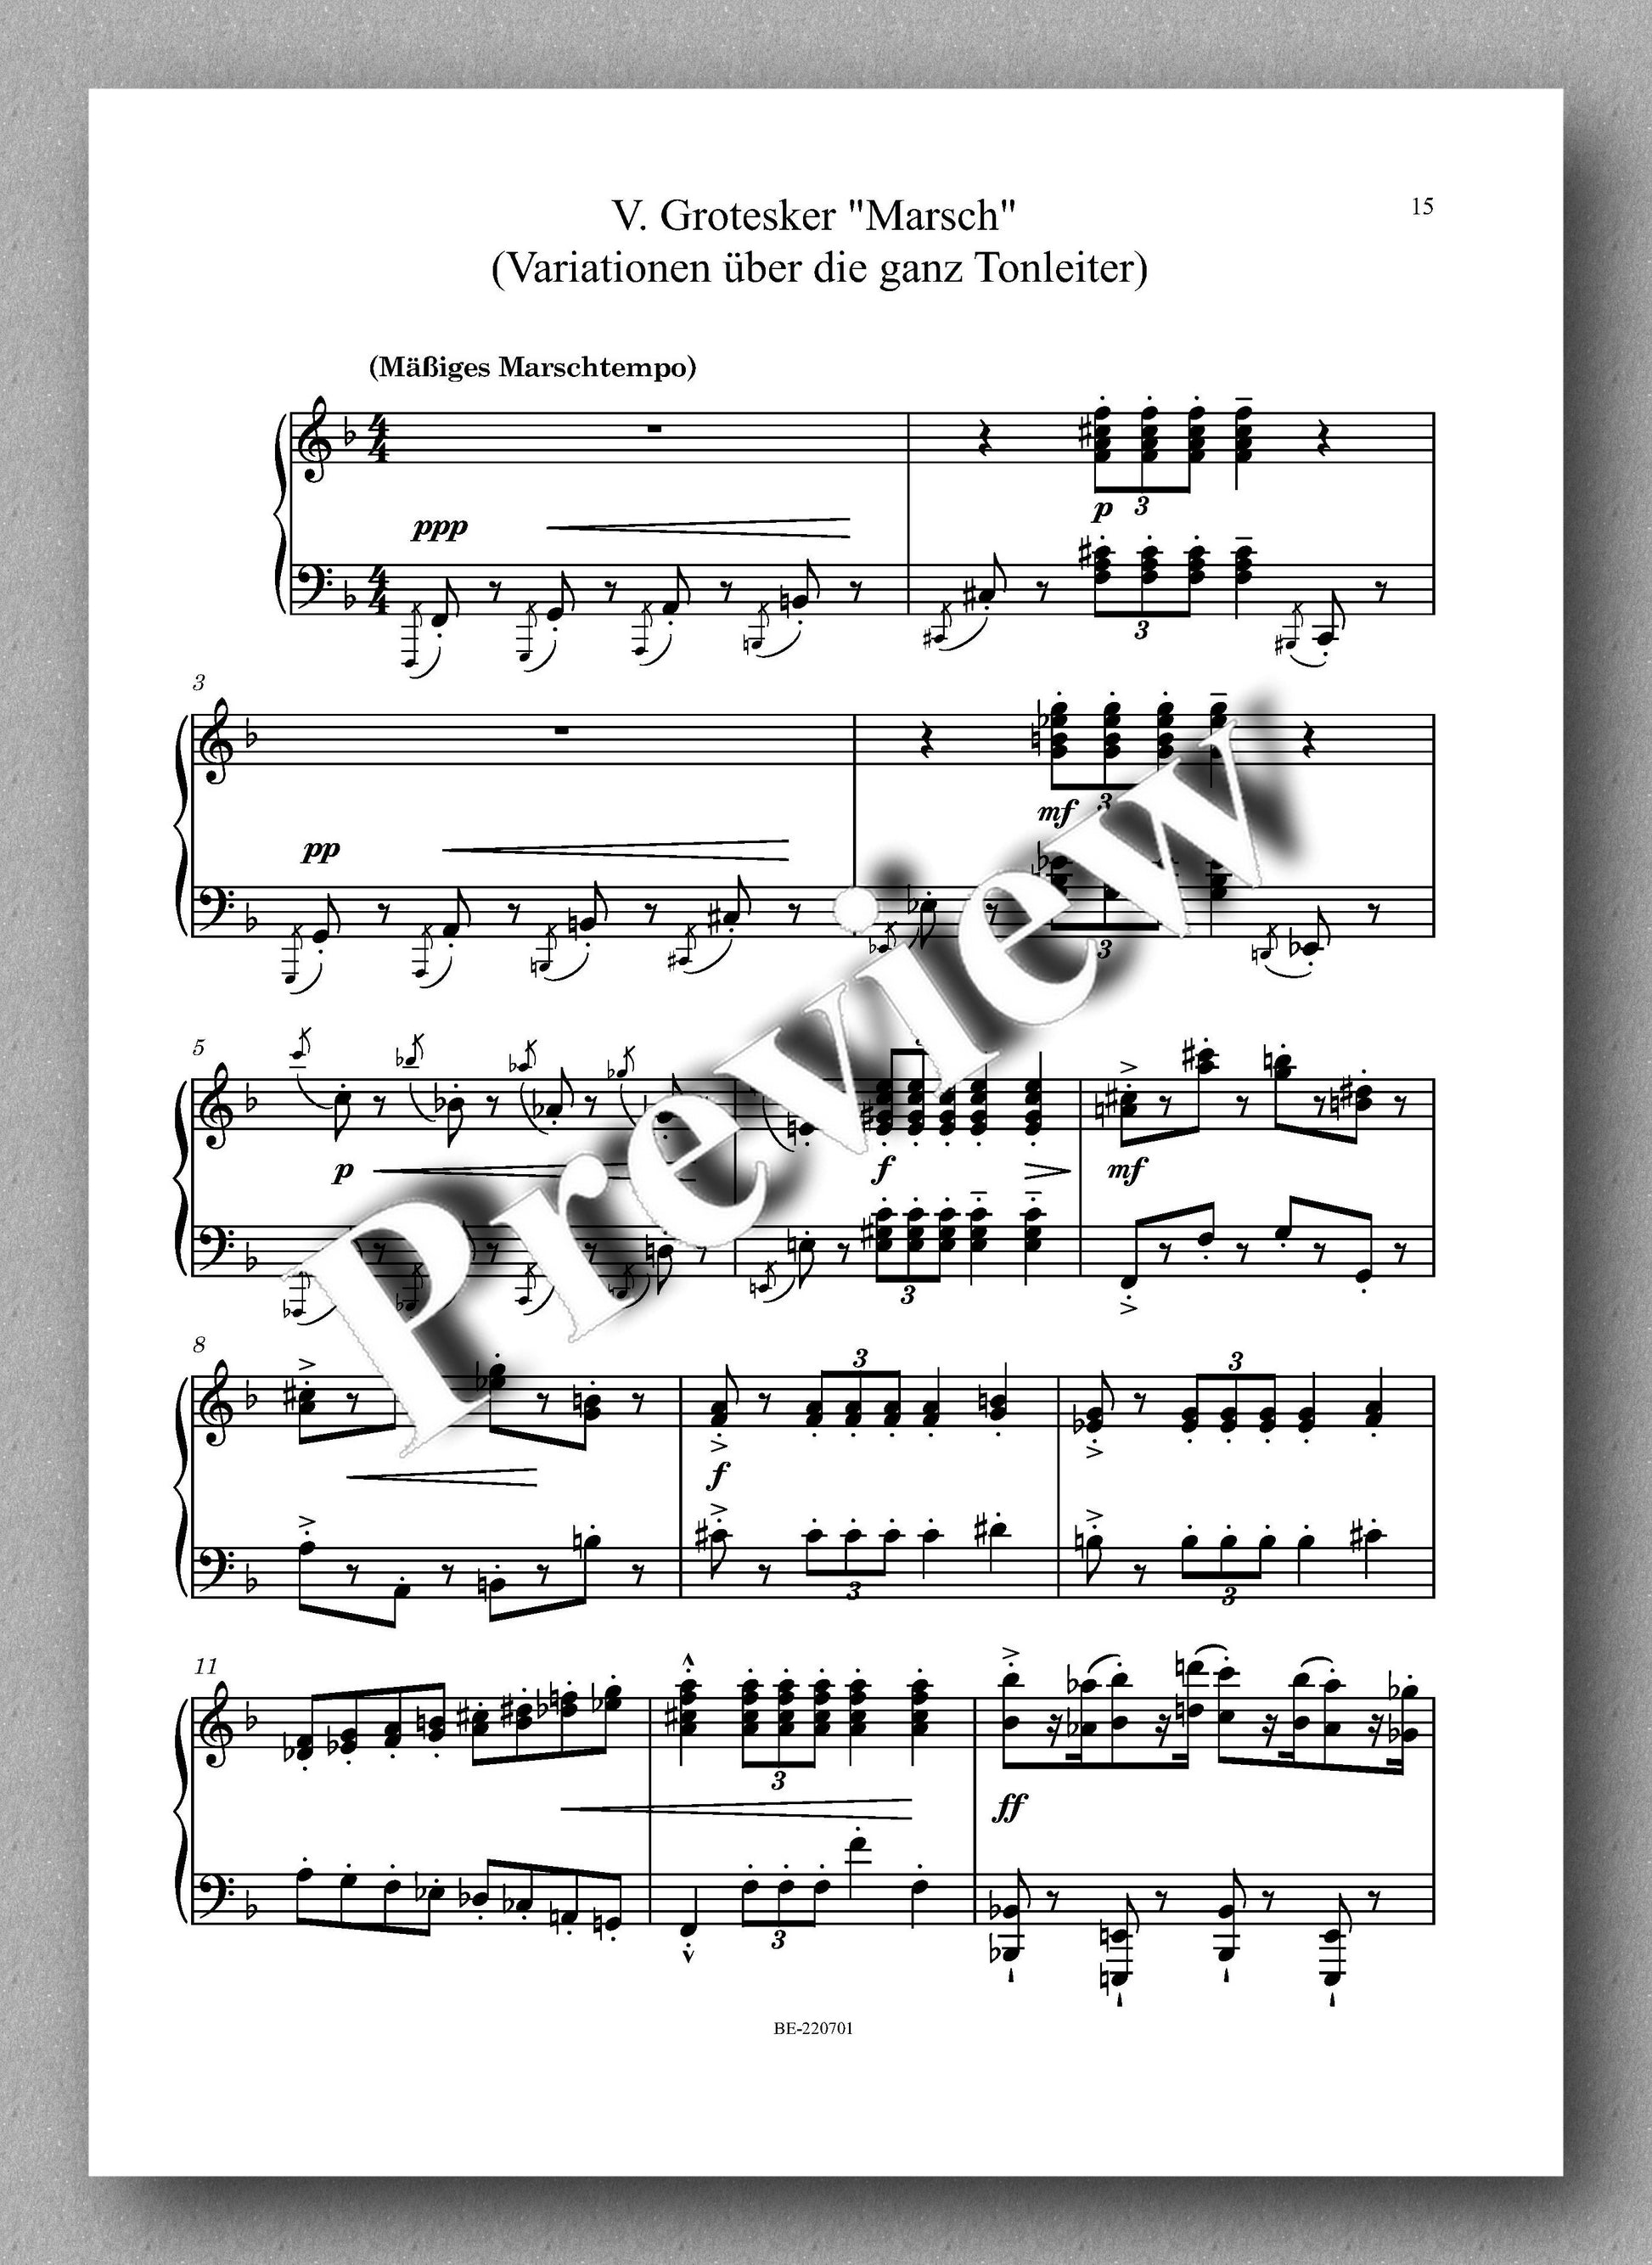 Rebay, Klavier No. 18, Tanzende Tonleitern - music score 4